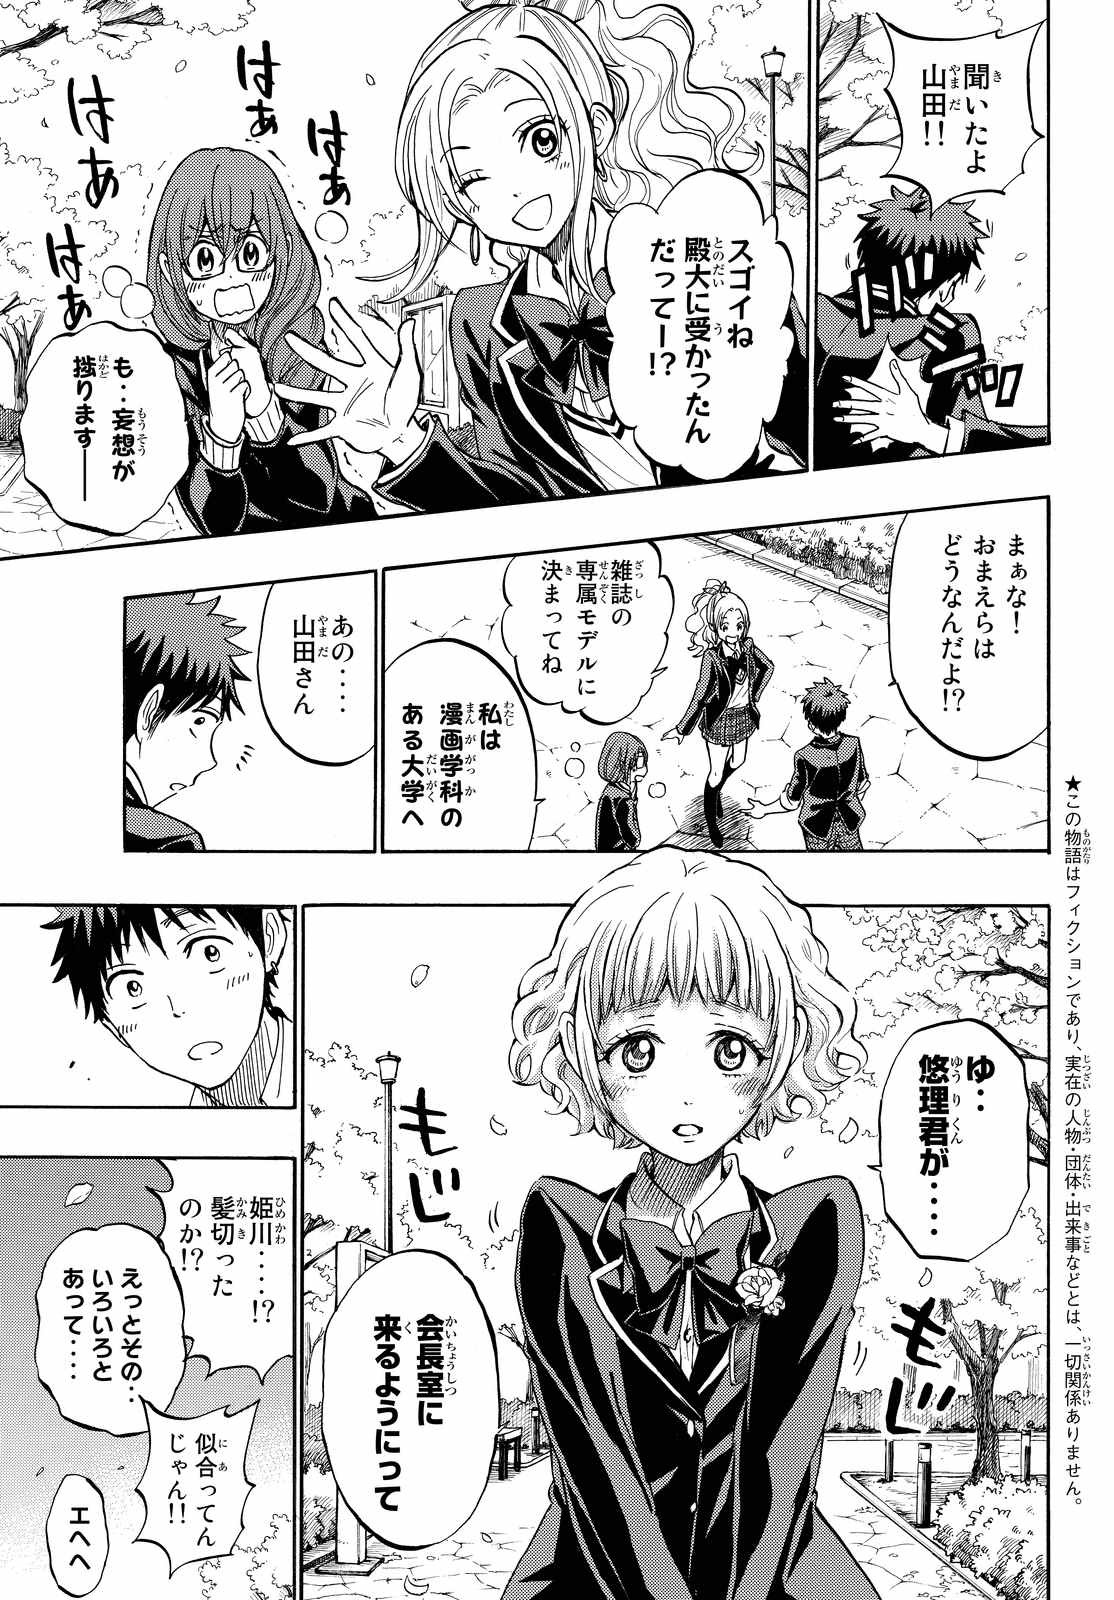 Yamada-kun to 7-nin no Majo - Chapter 241 - Page 3